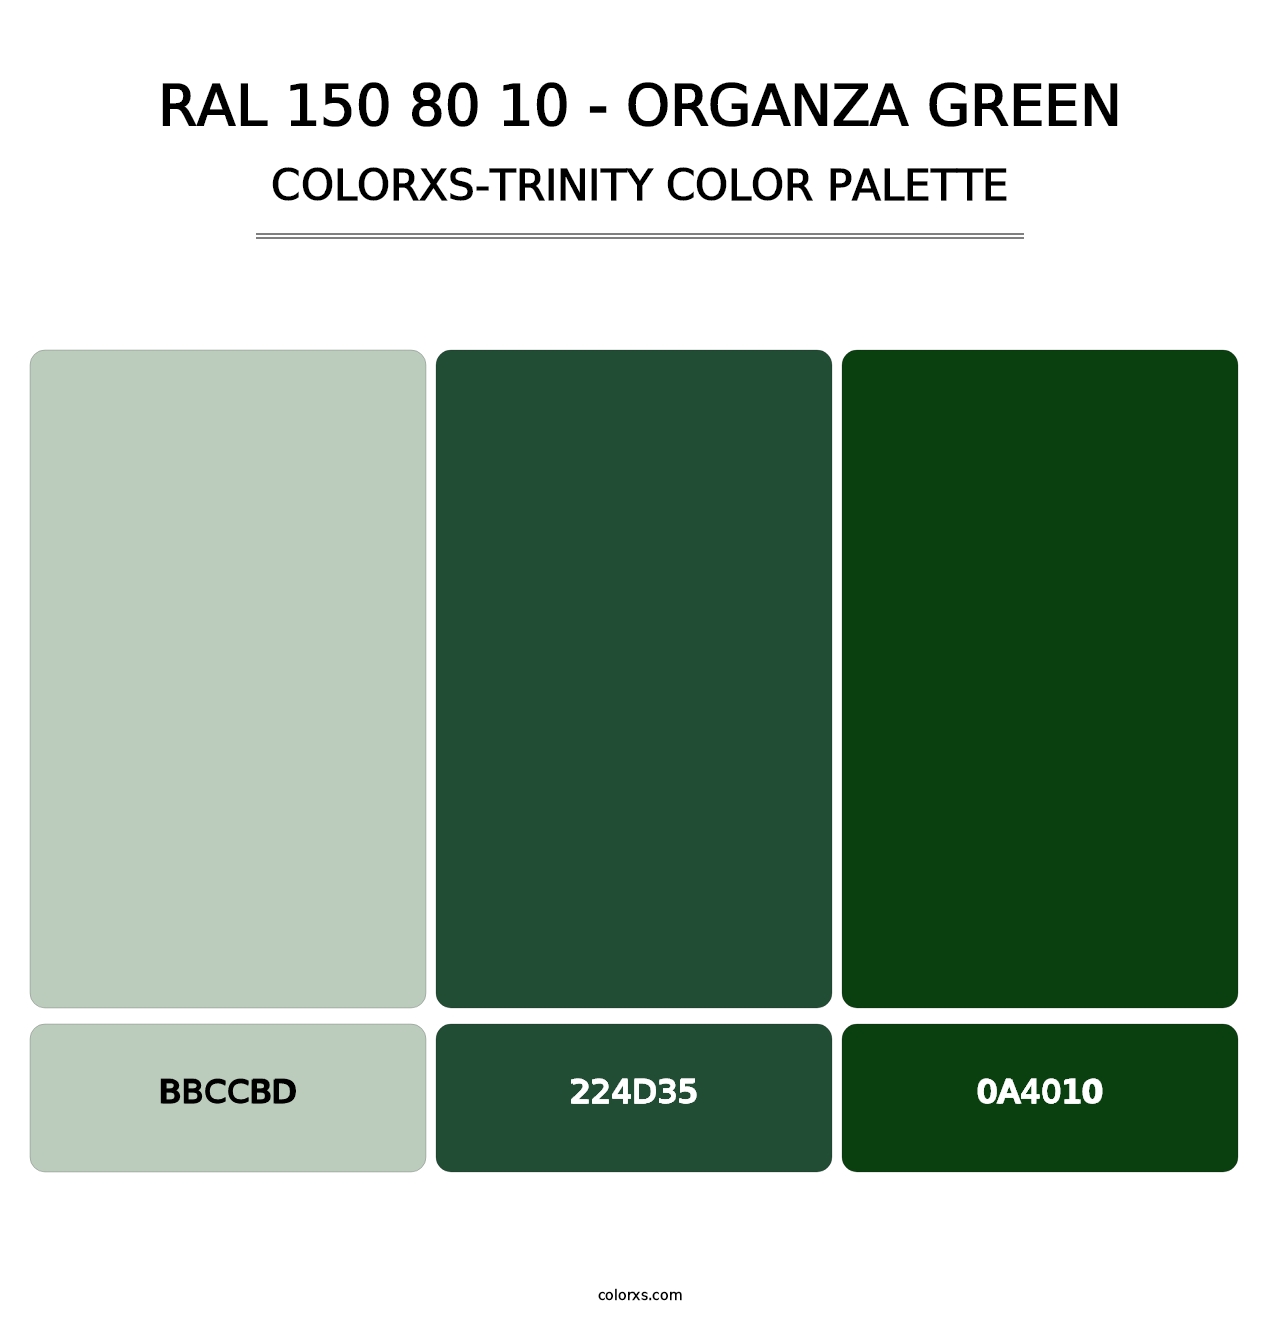 RAL 150 80 10 - Organza Green - Colorxs Trinity Palette